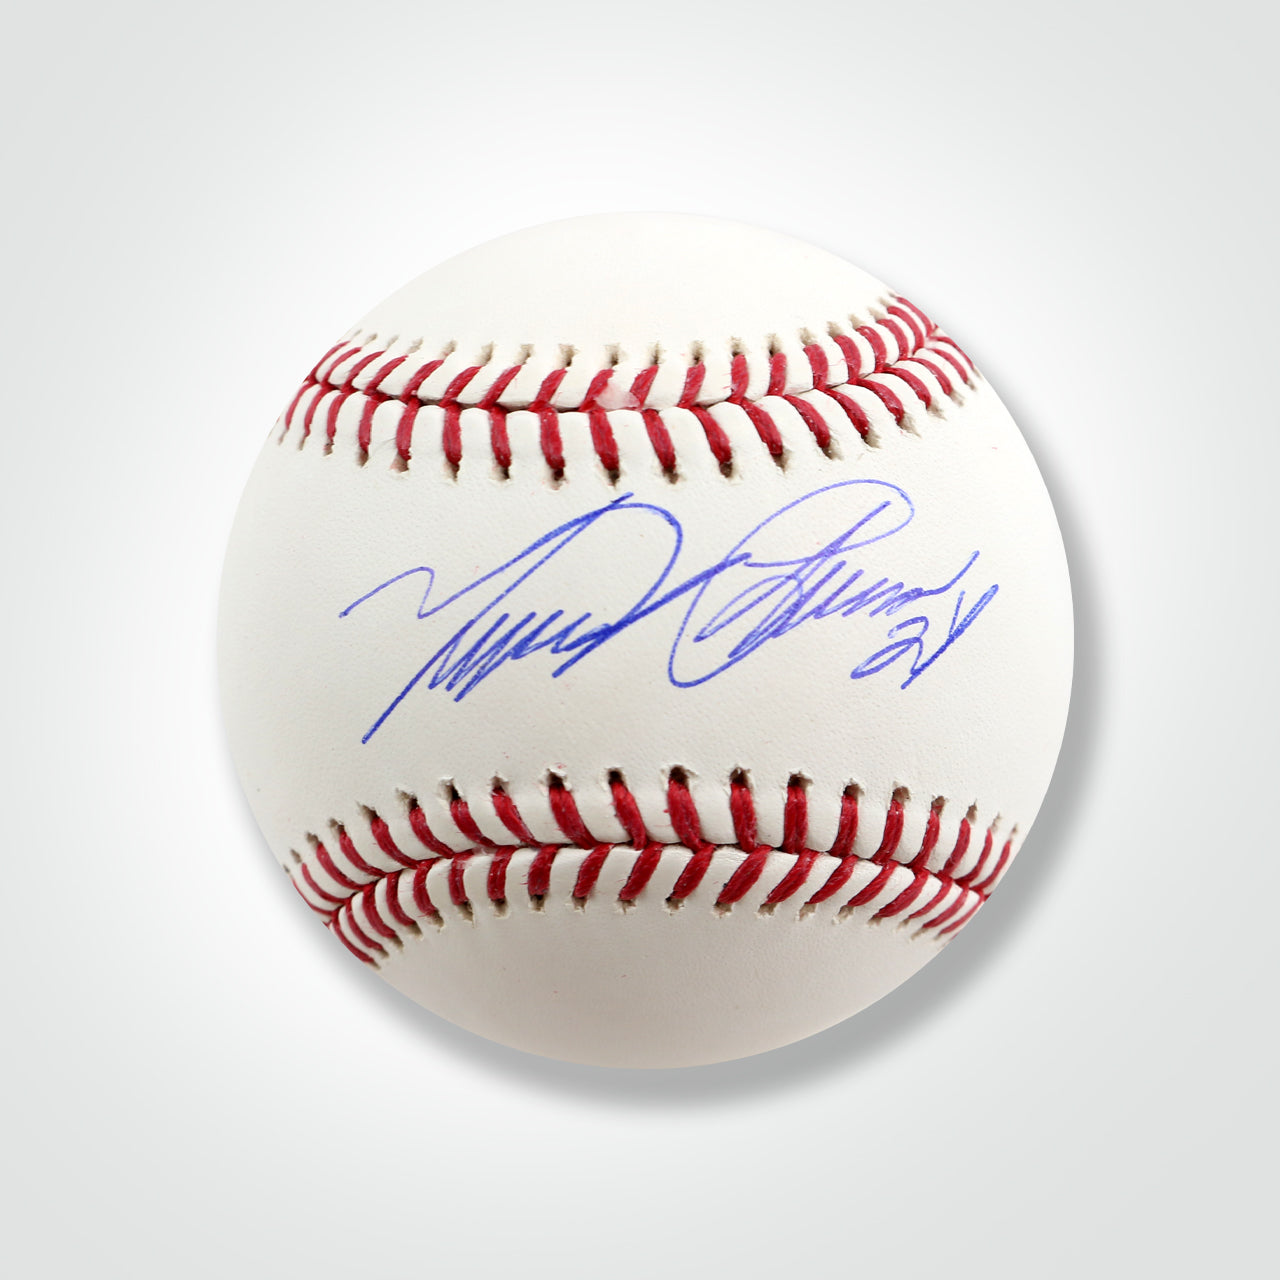 Miguel Cabrera Signed Official Major League Baseball